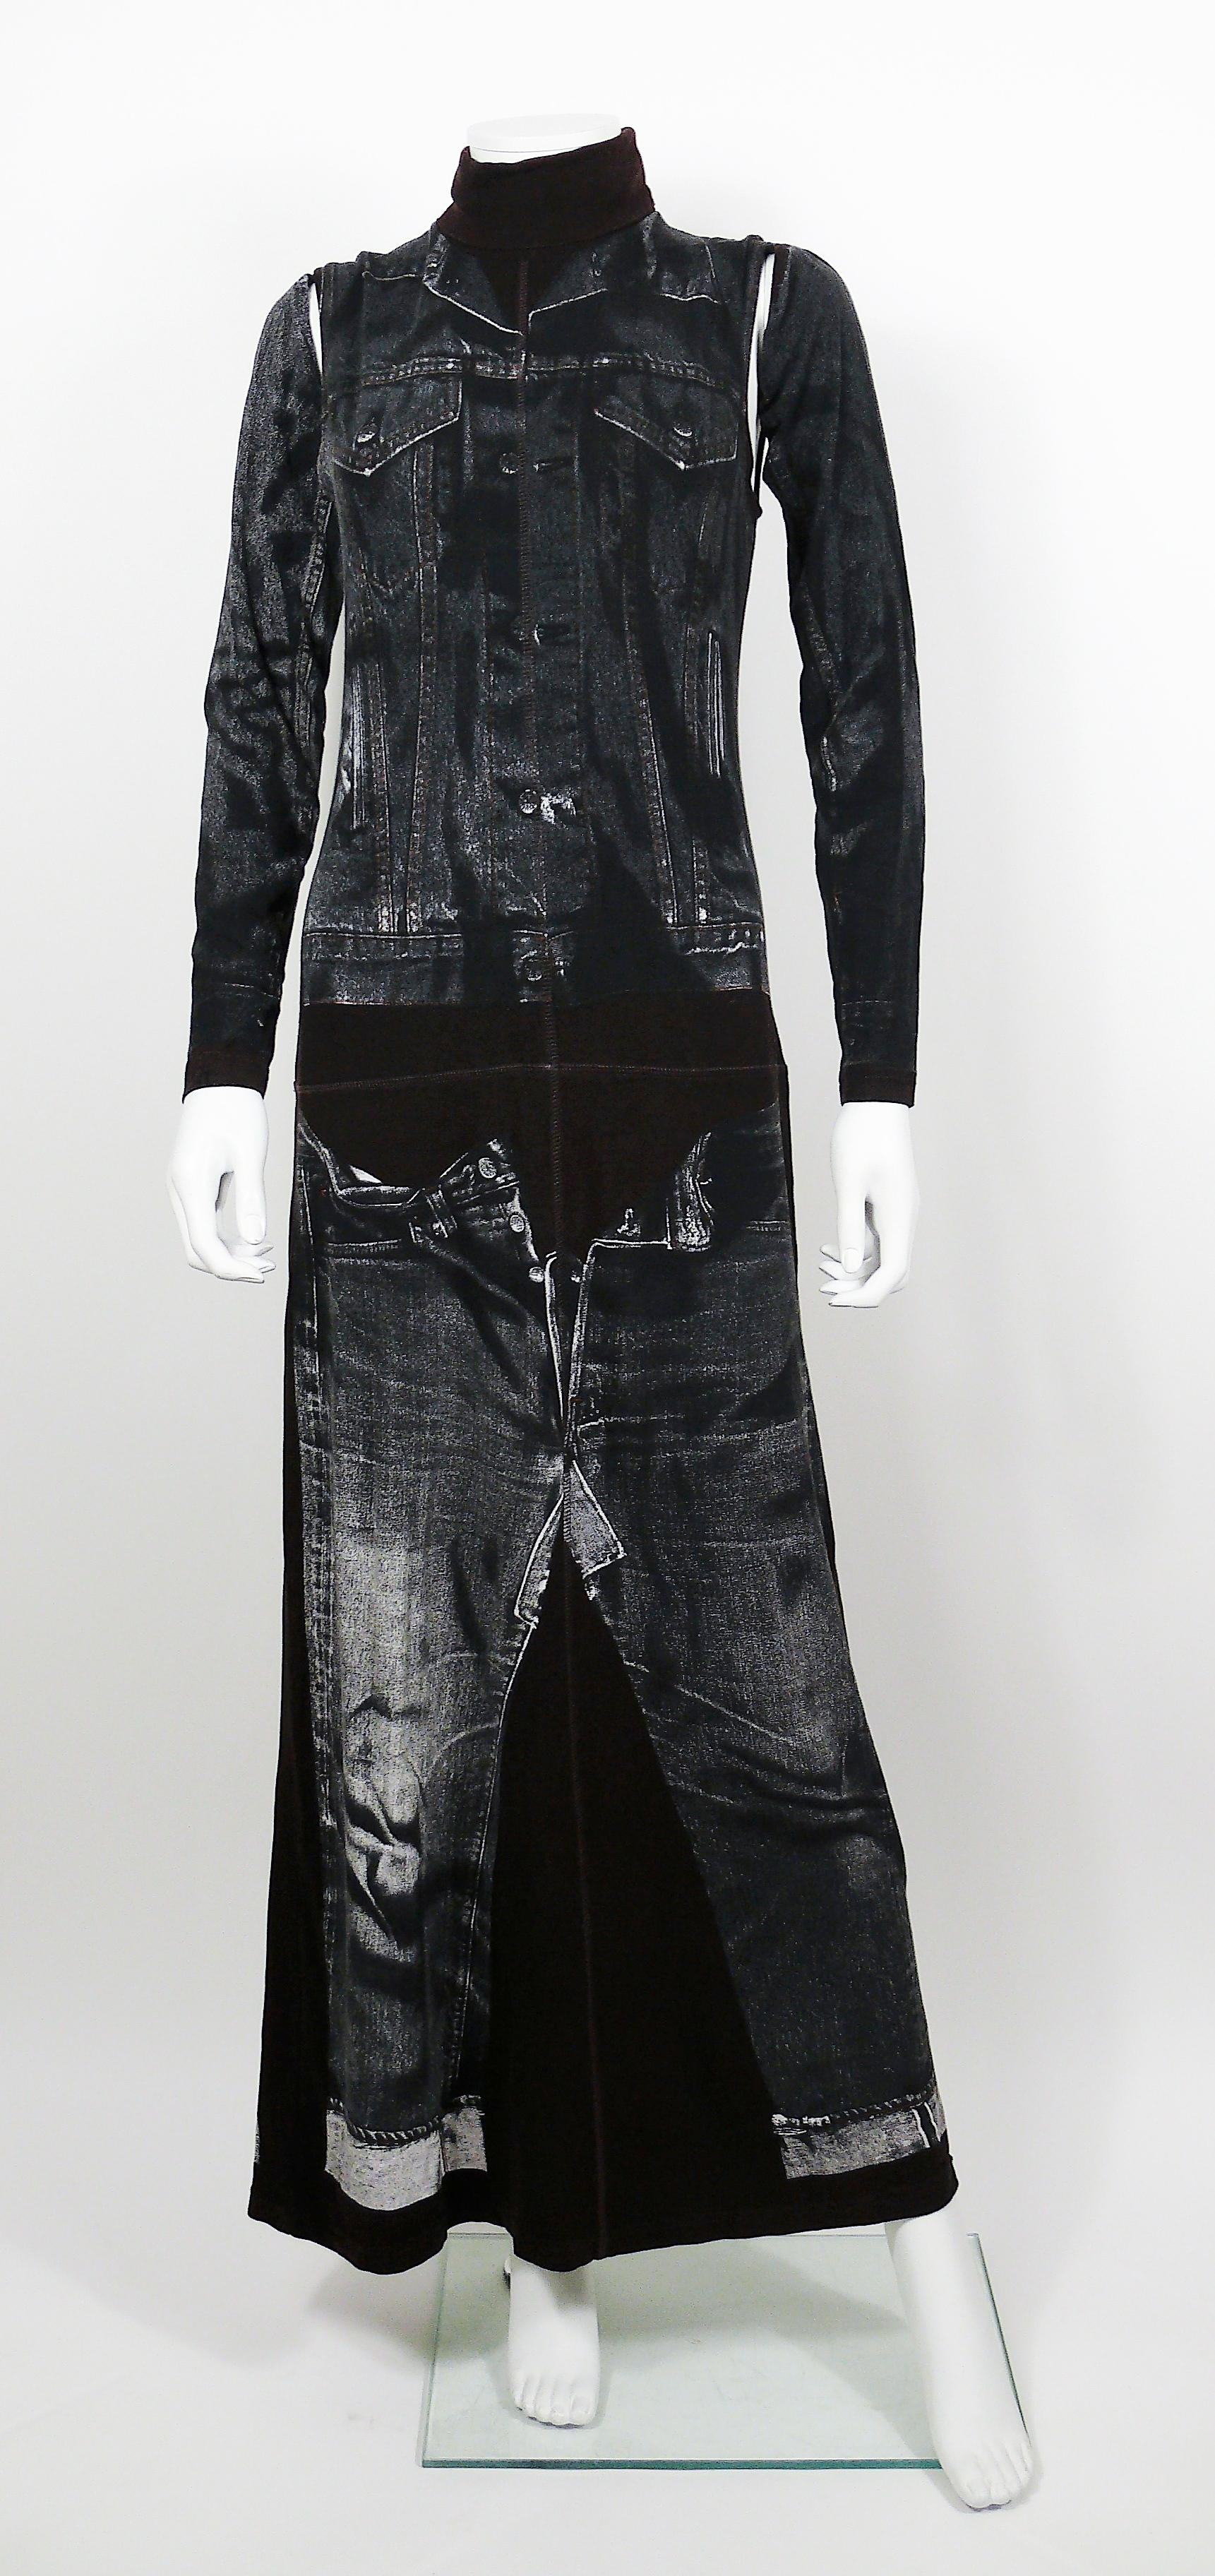 Jean Paul Gaultier Trompe L'oeil Maxi Dress with Detachable Sleeves (Schwarz)